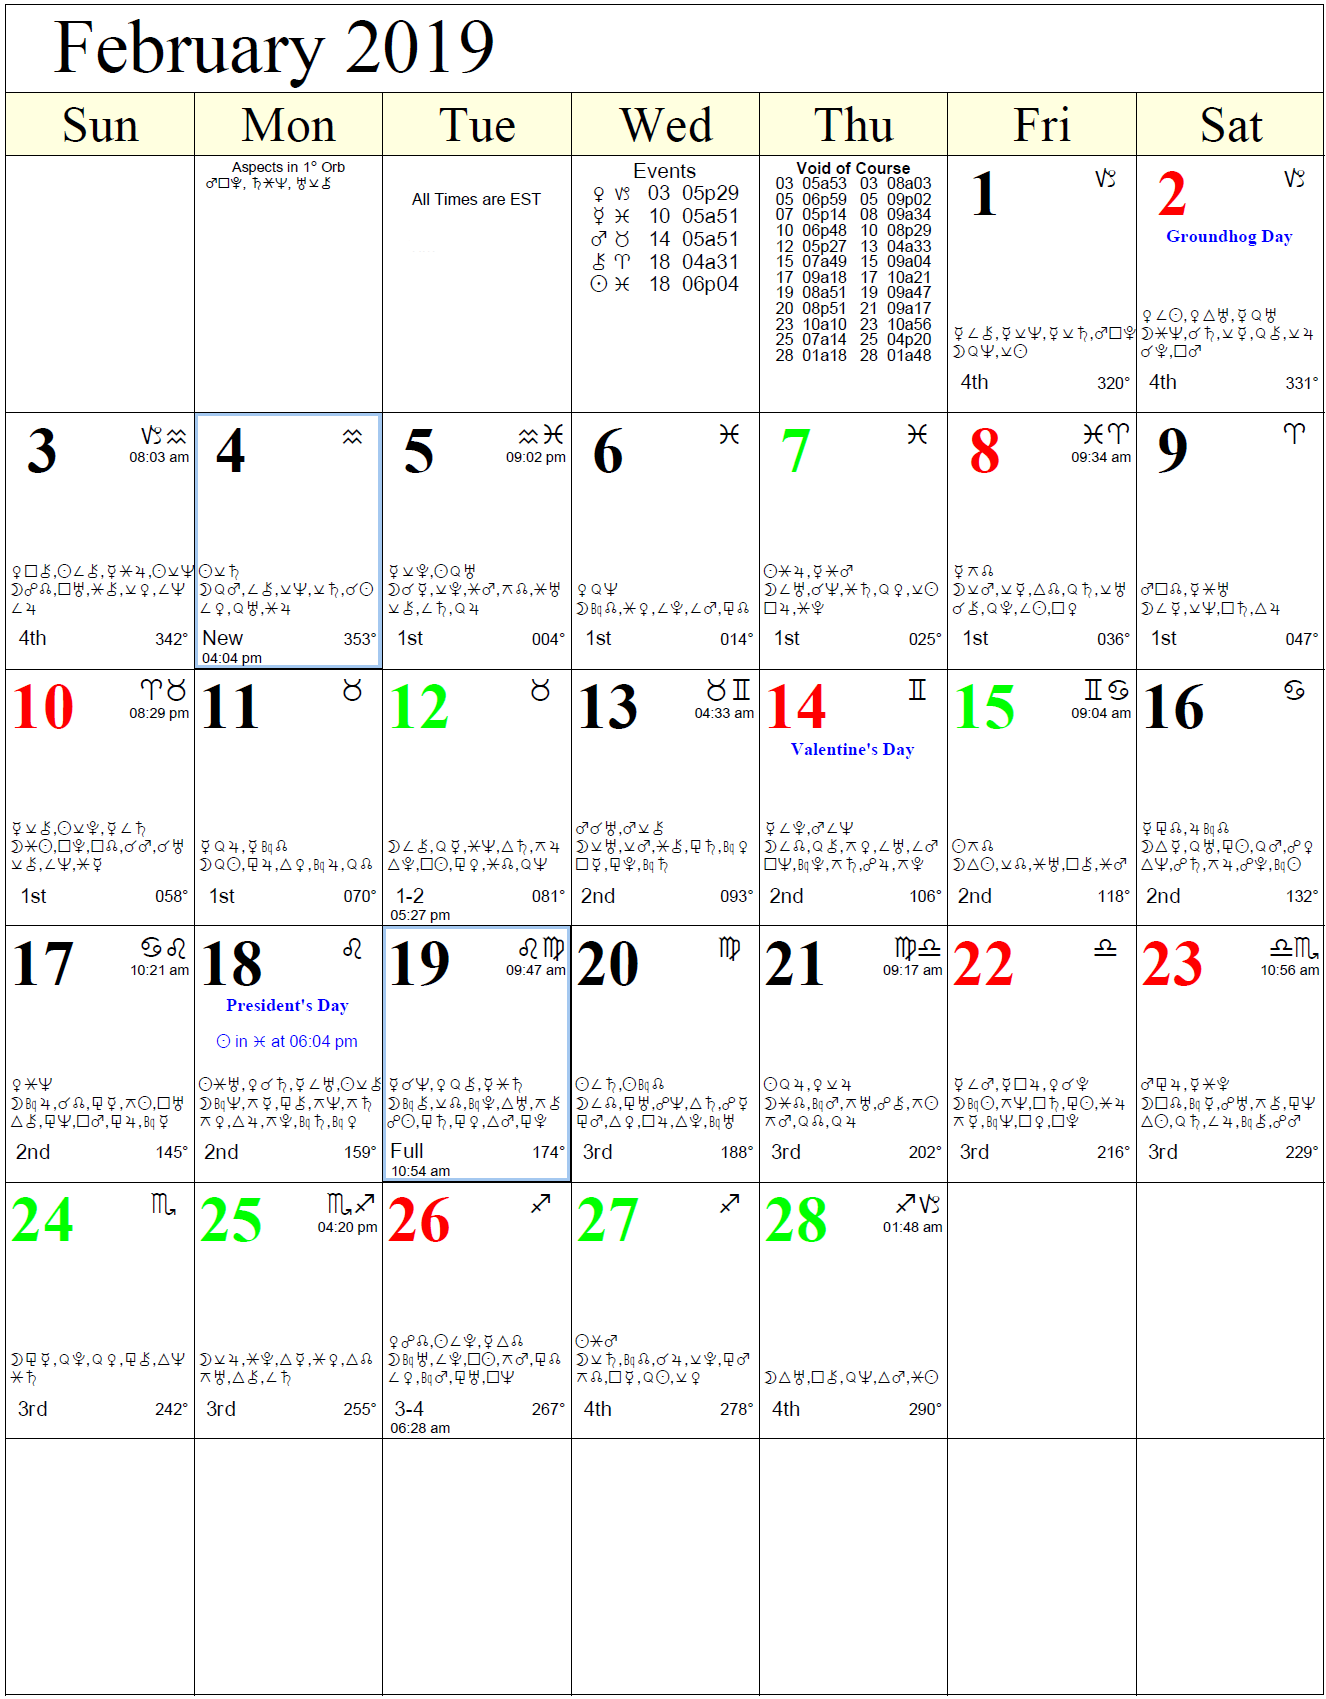 Monthly Astrology Calendars1326 x 1699